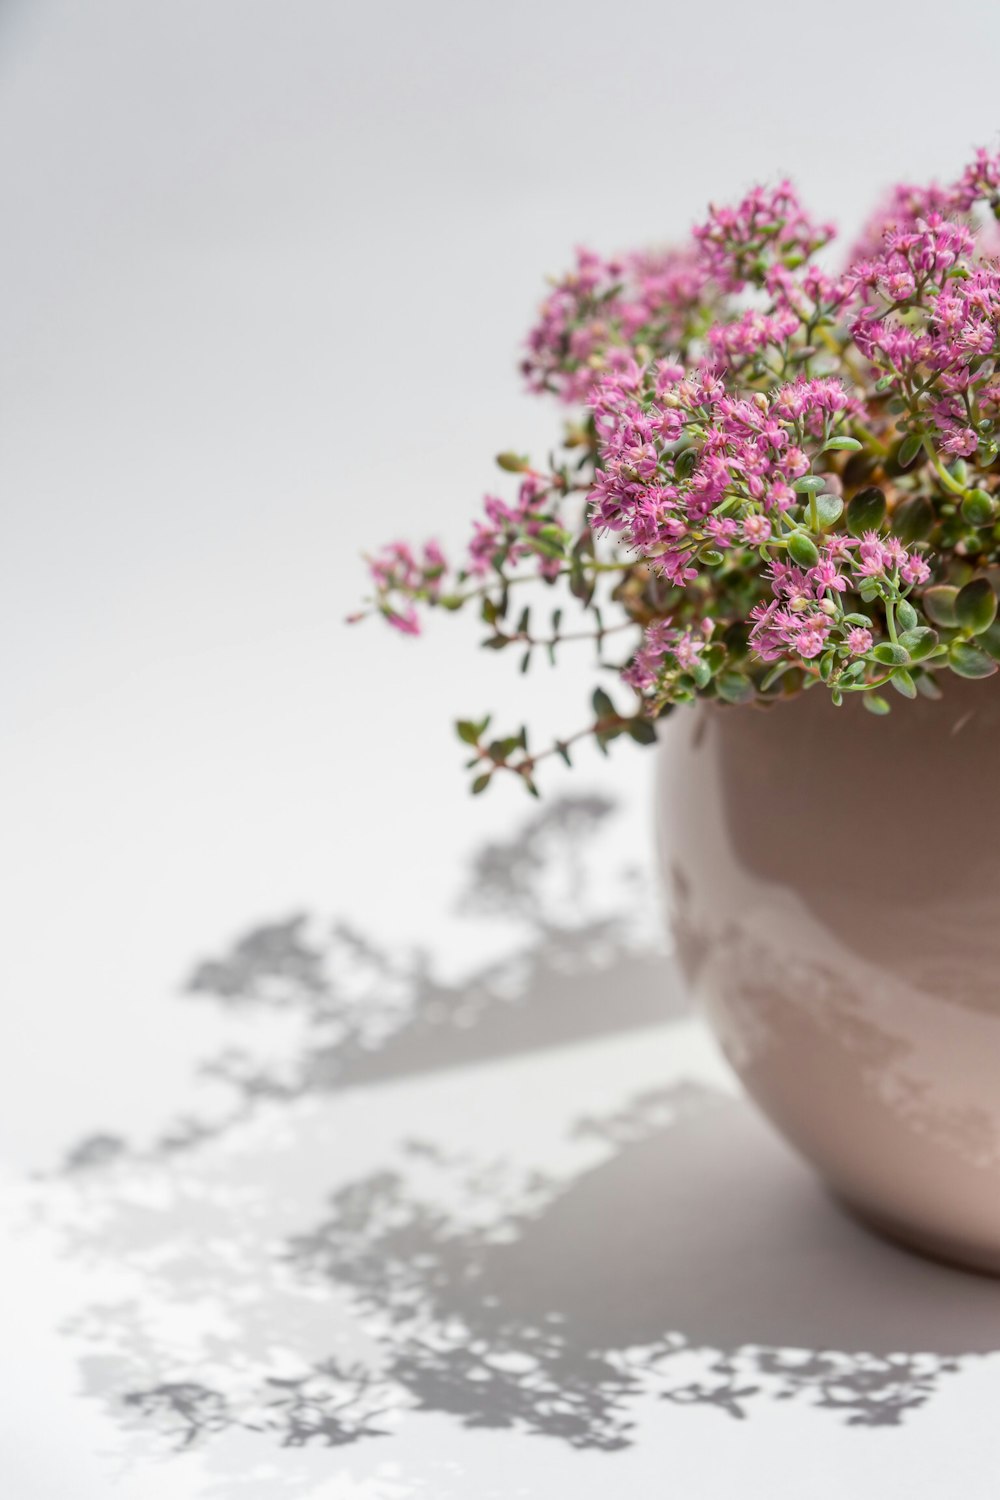 rosa Blumen in grauer Keramikvase